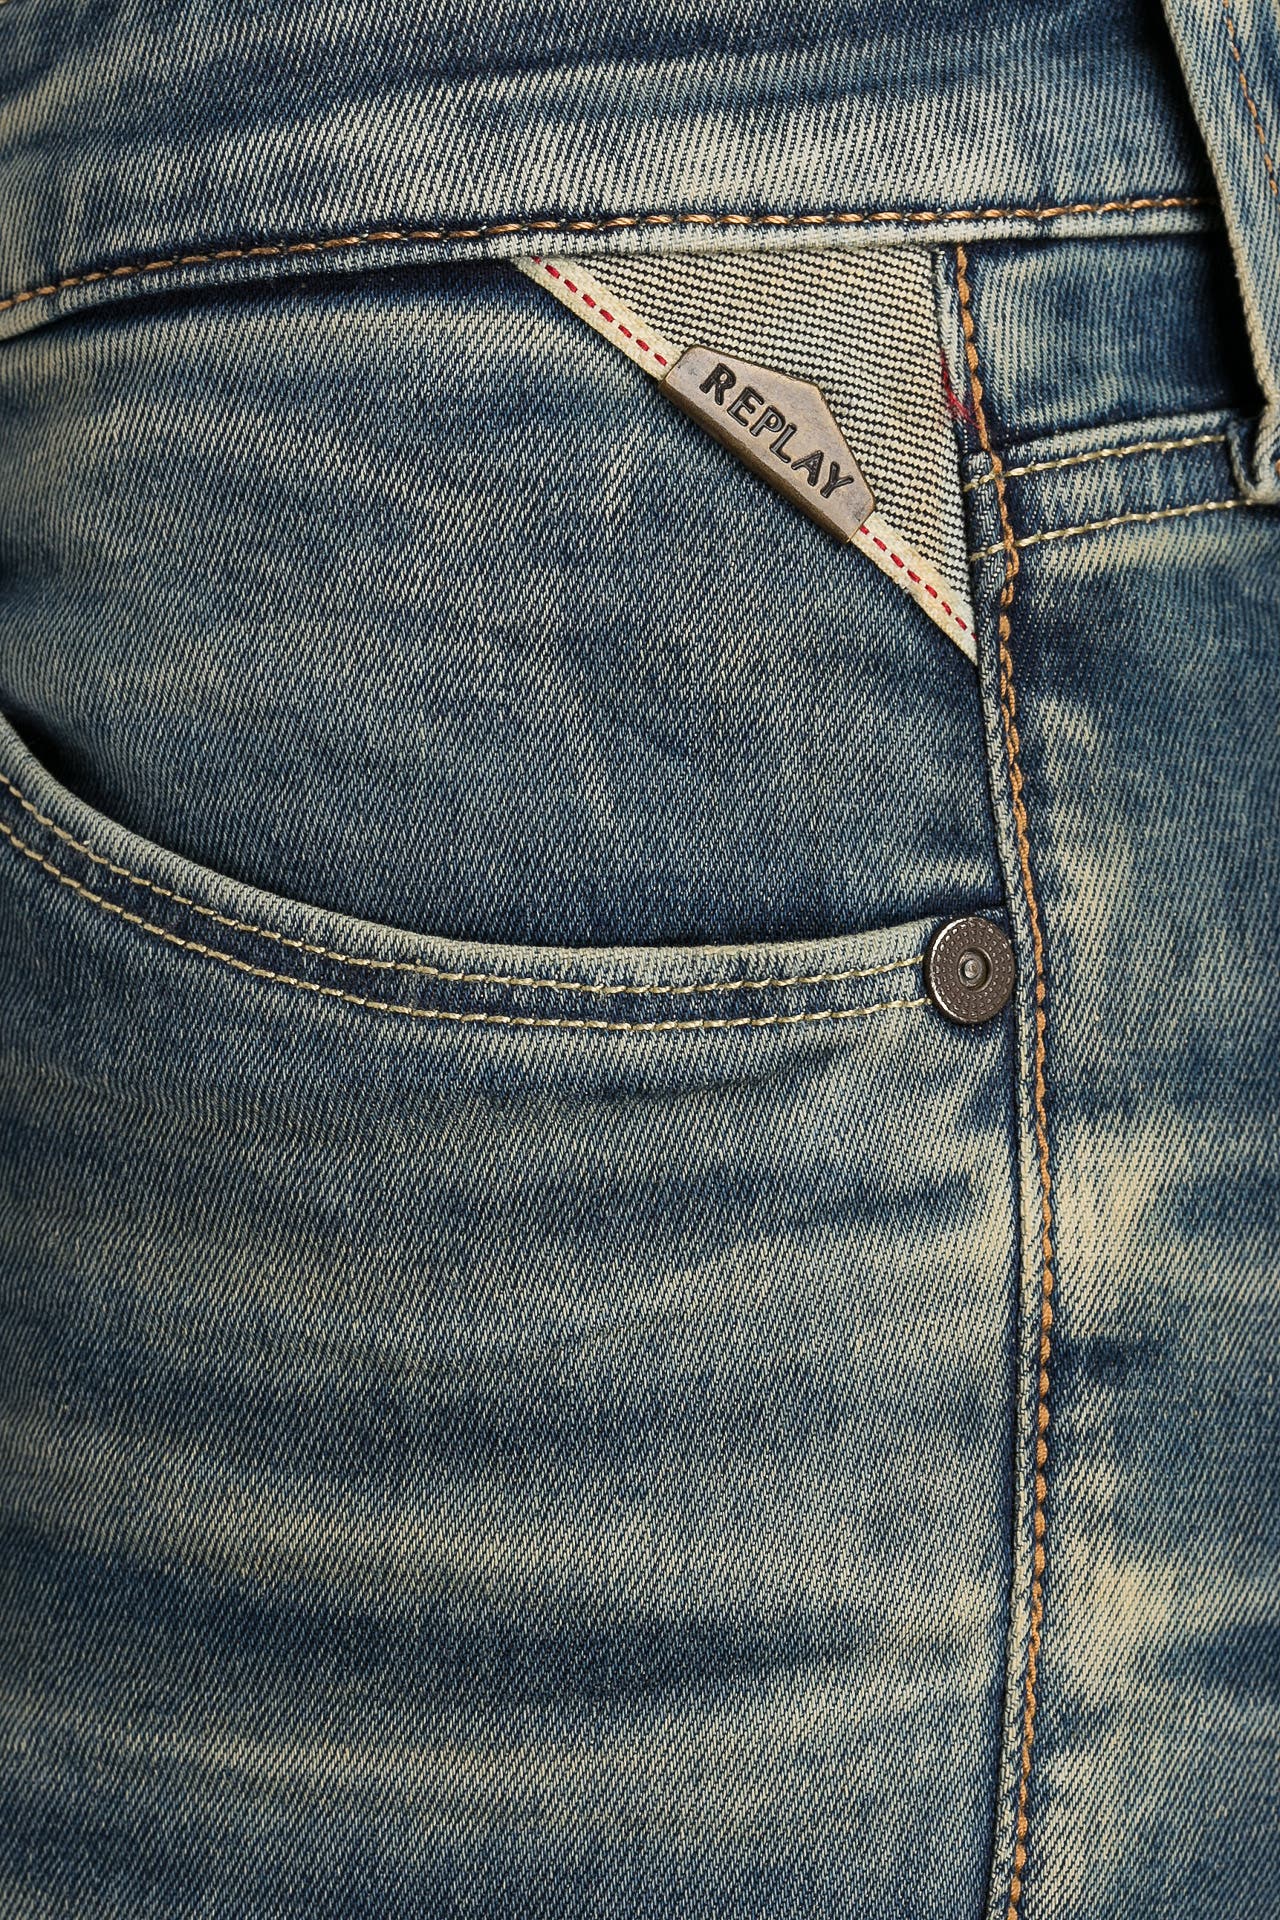 juni De Kamer Productie Jeans 'Rockxanne' slim - REPLAY » günstig online kaufen | OUTLETCITY.COM